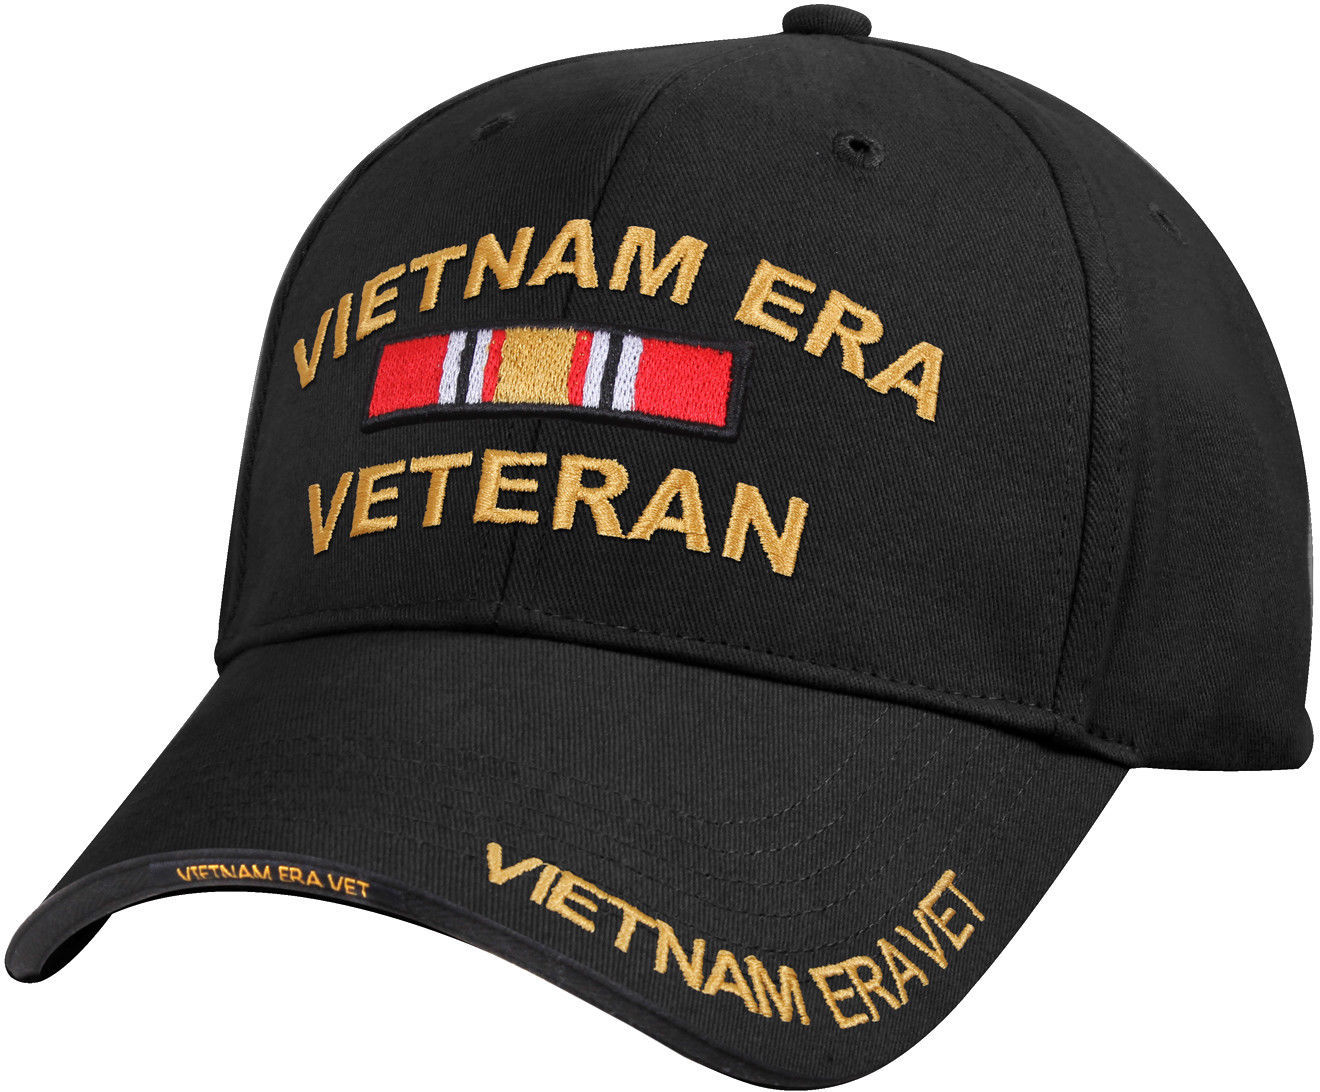 Us Army Vietnam Era Veteran Hat - Army Military